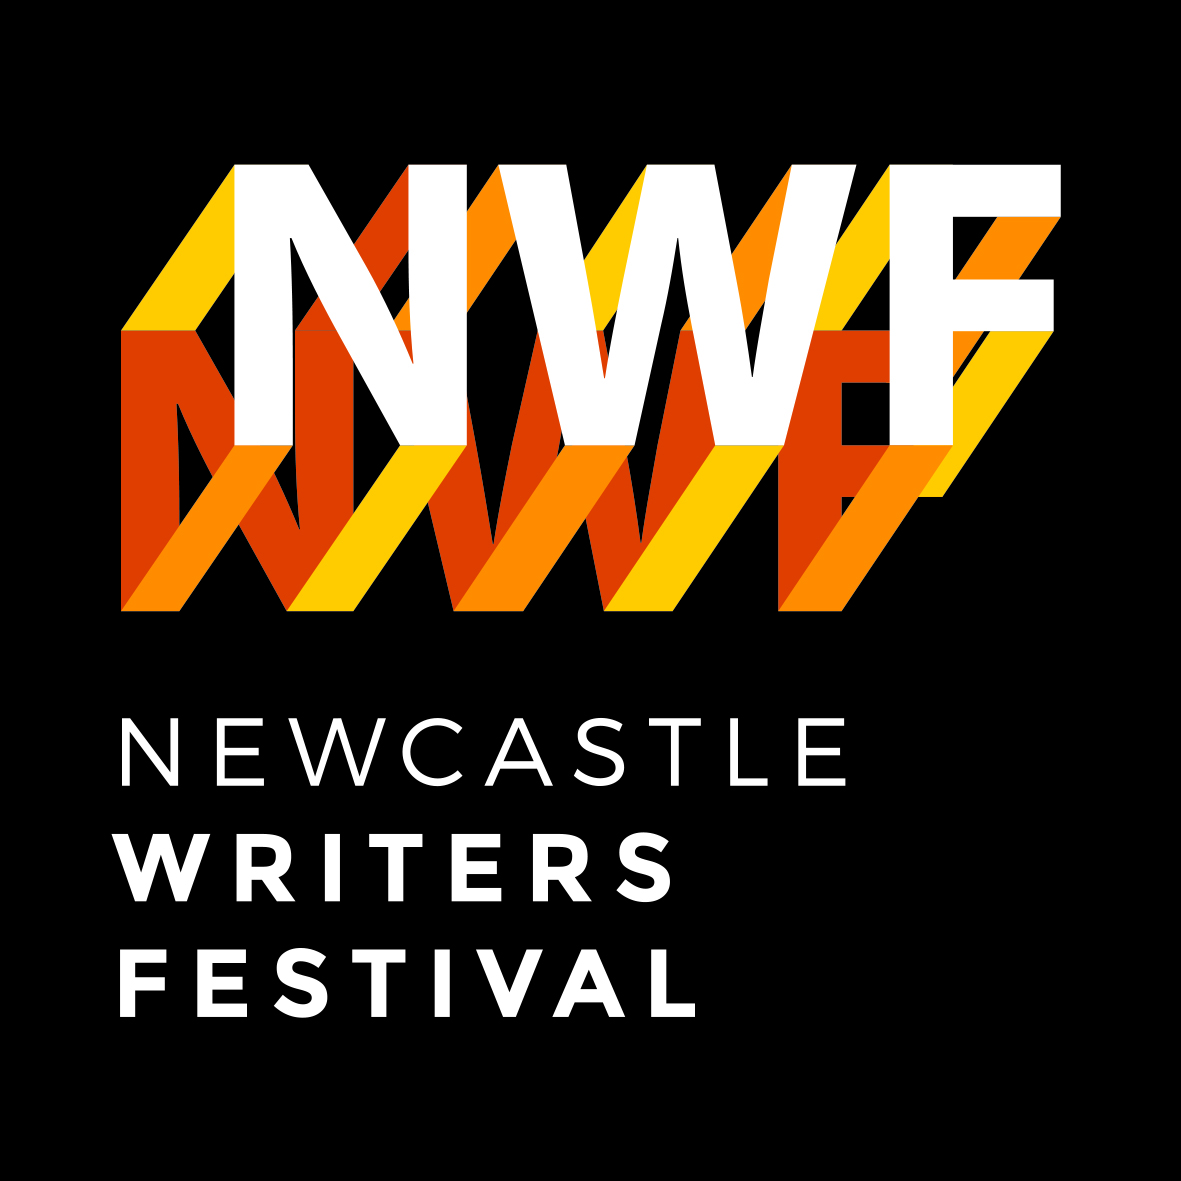 Newcastle Writers Festival